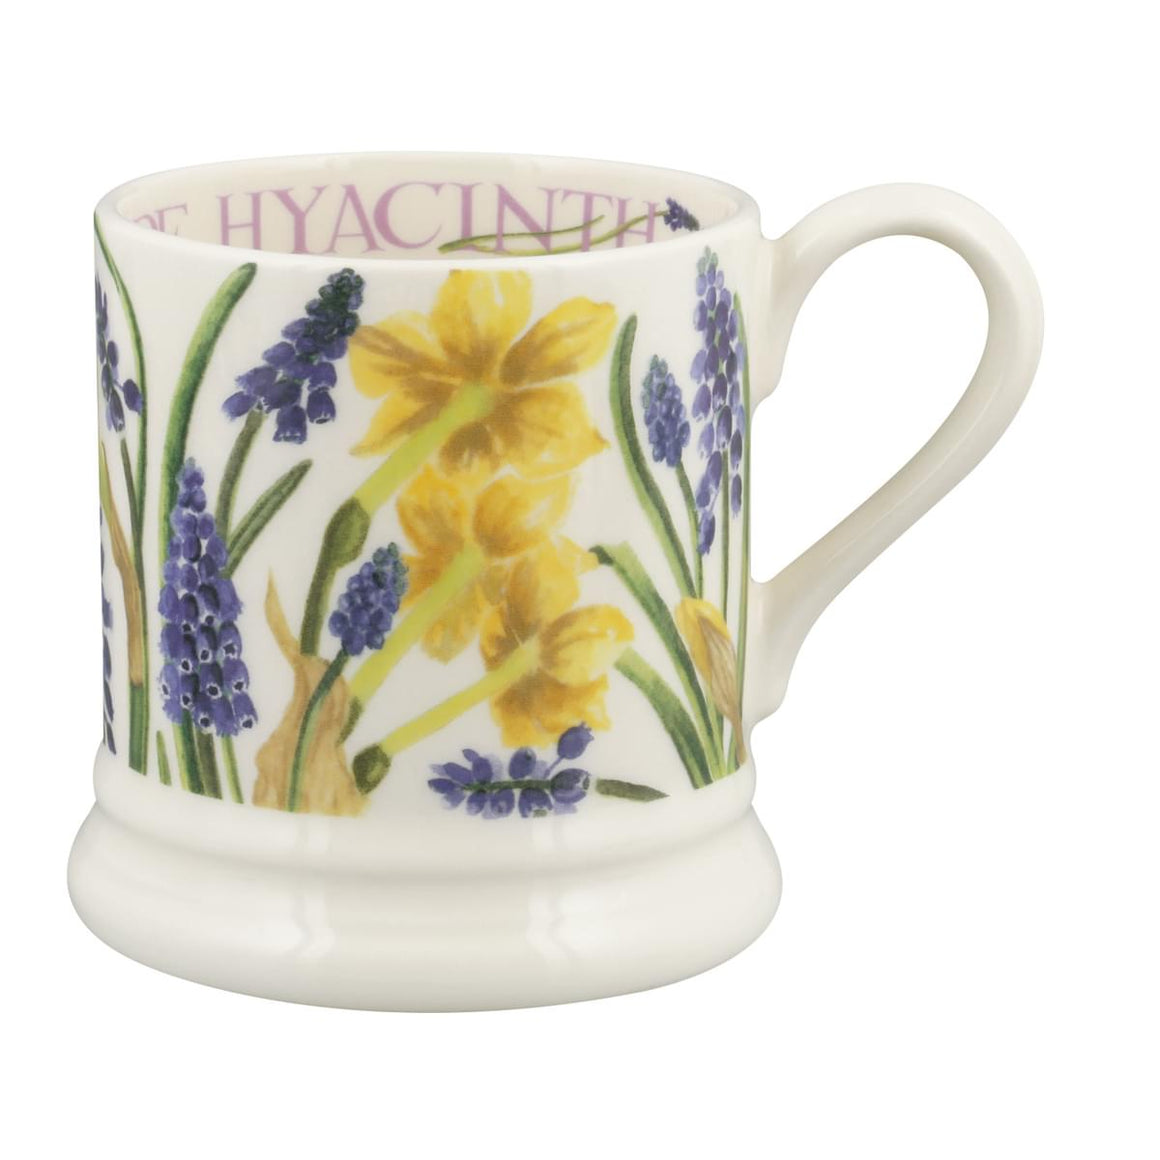 Emma Bridgewater Tete-a-tete & Grape Hyacinth Half Pint Mug